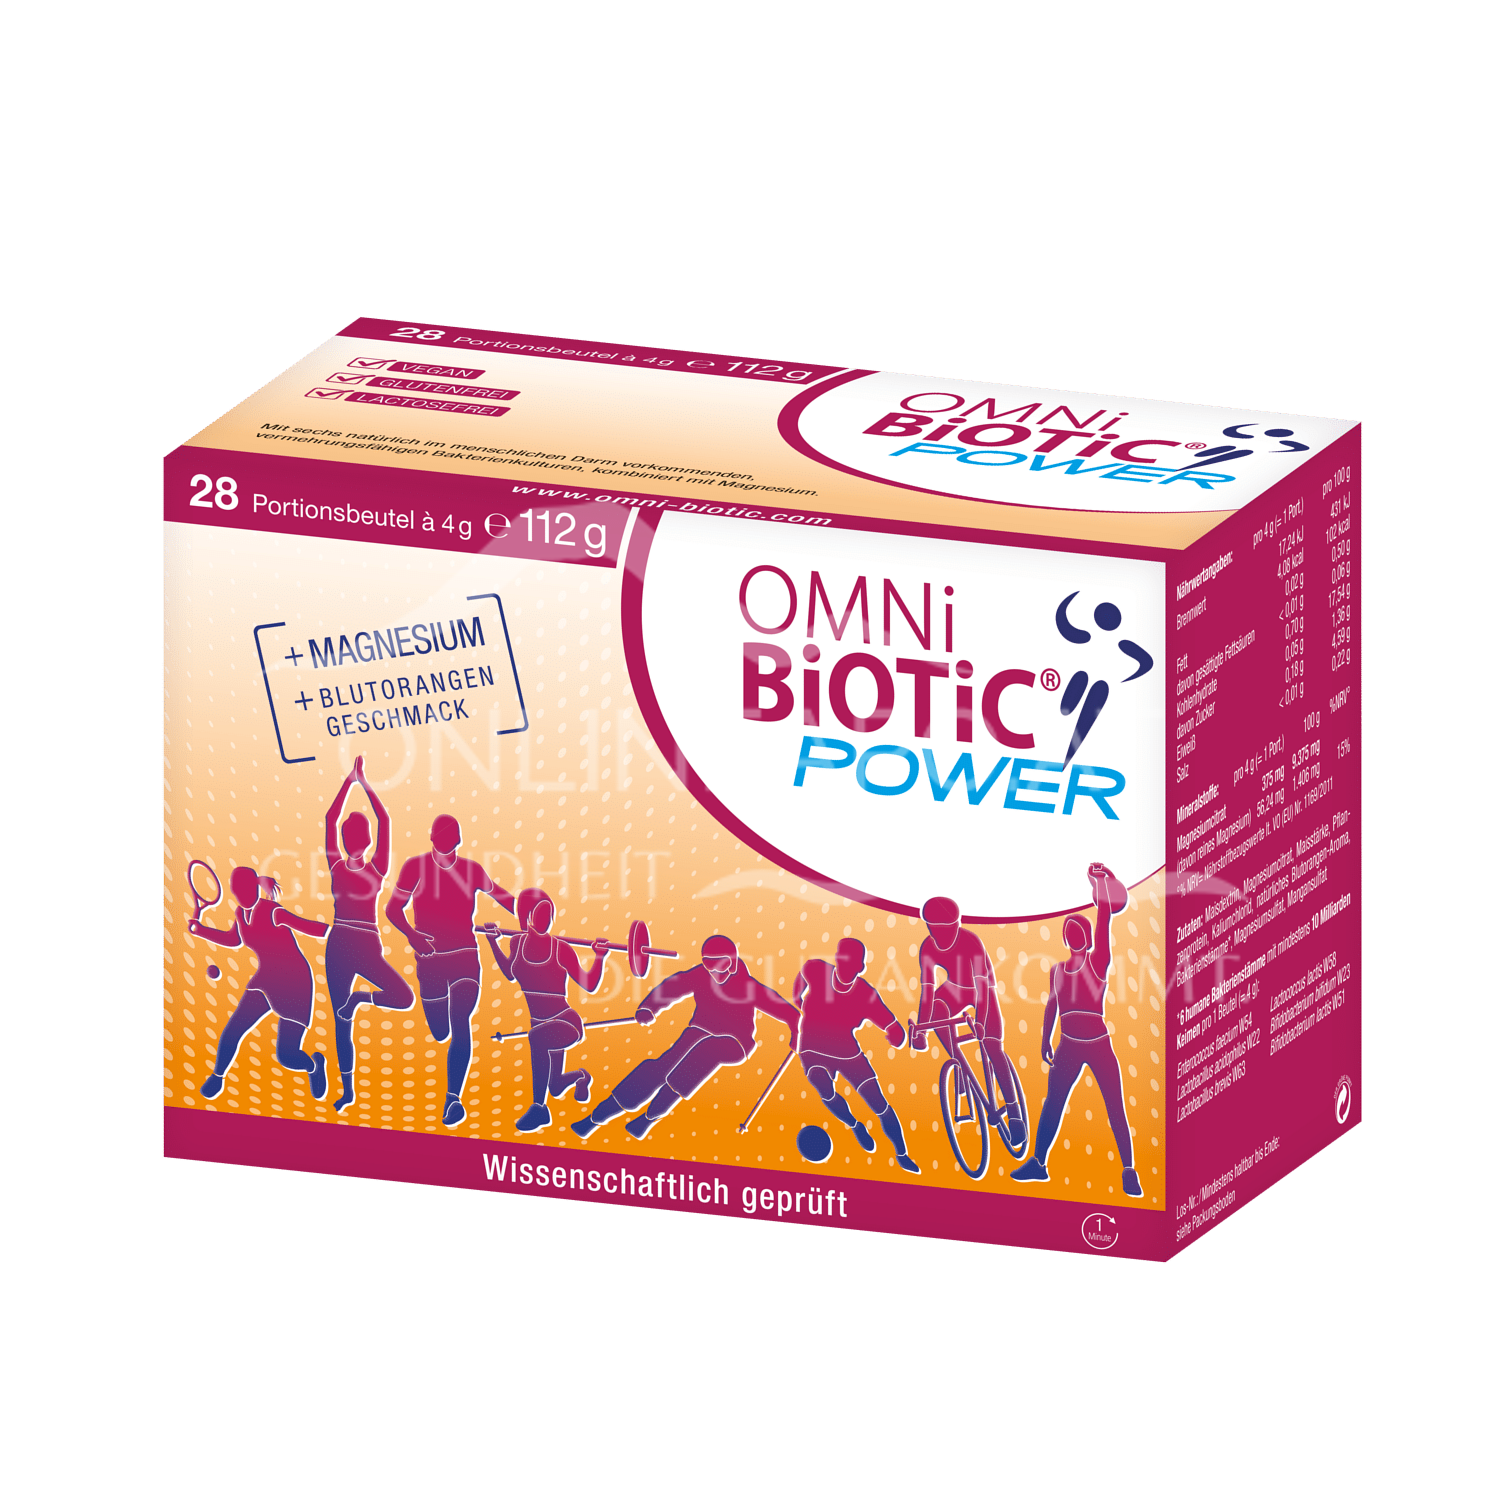 OMNi-BiOTiC® POWER 4g